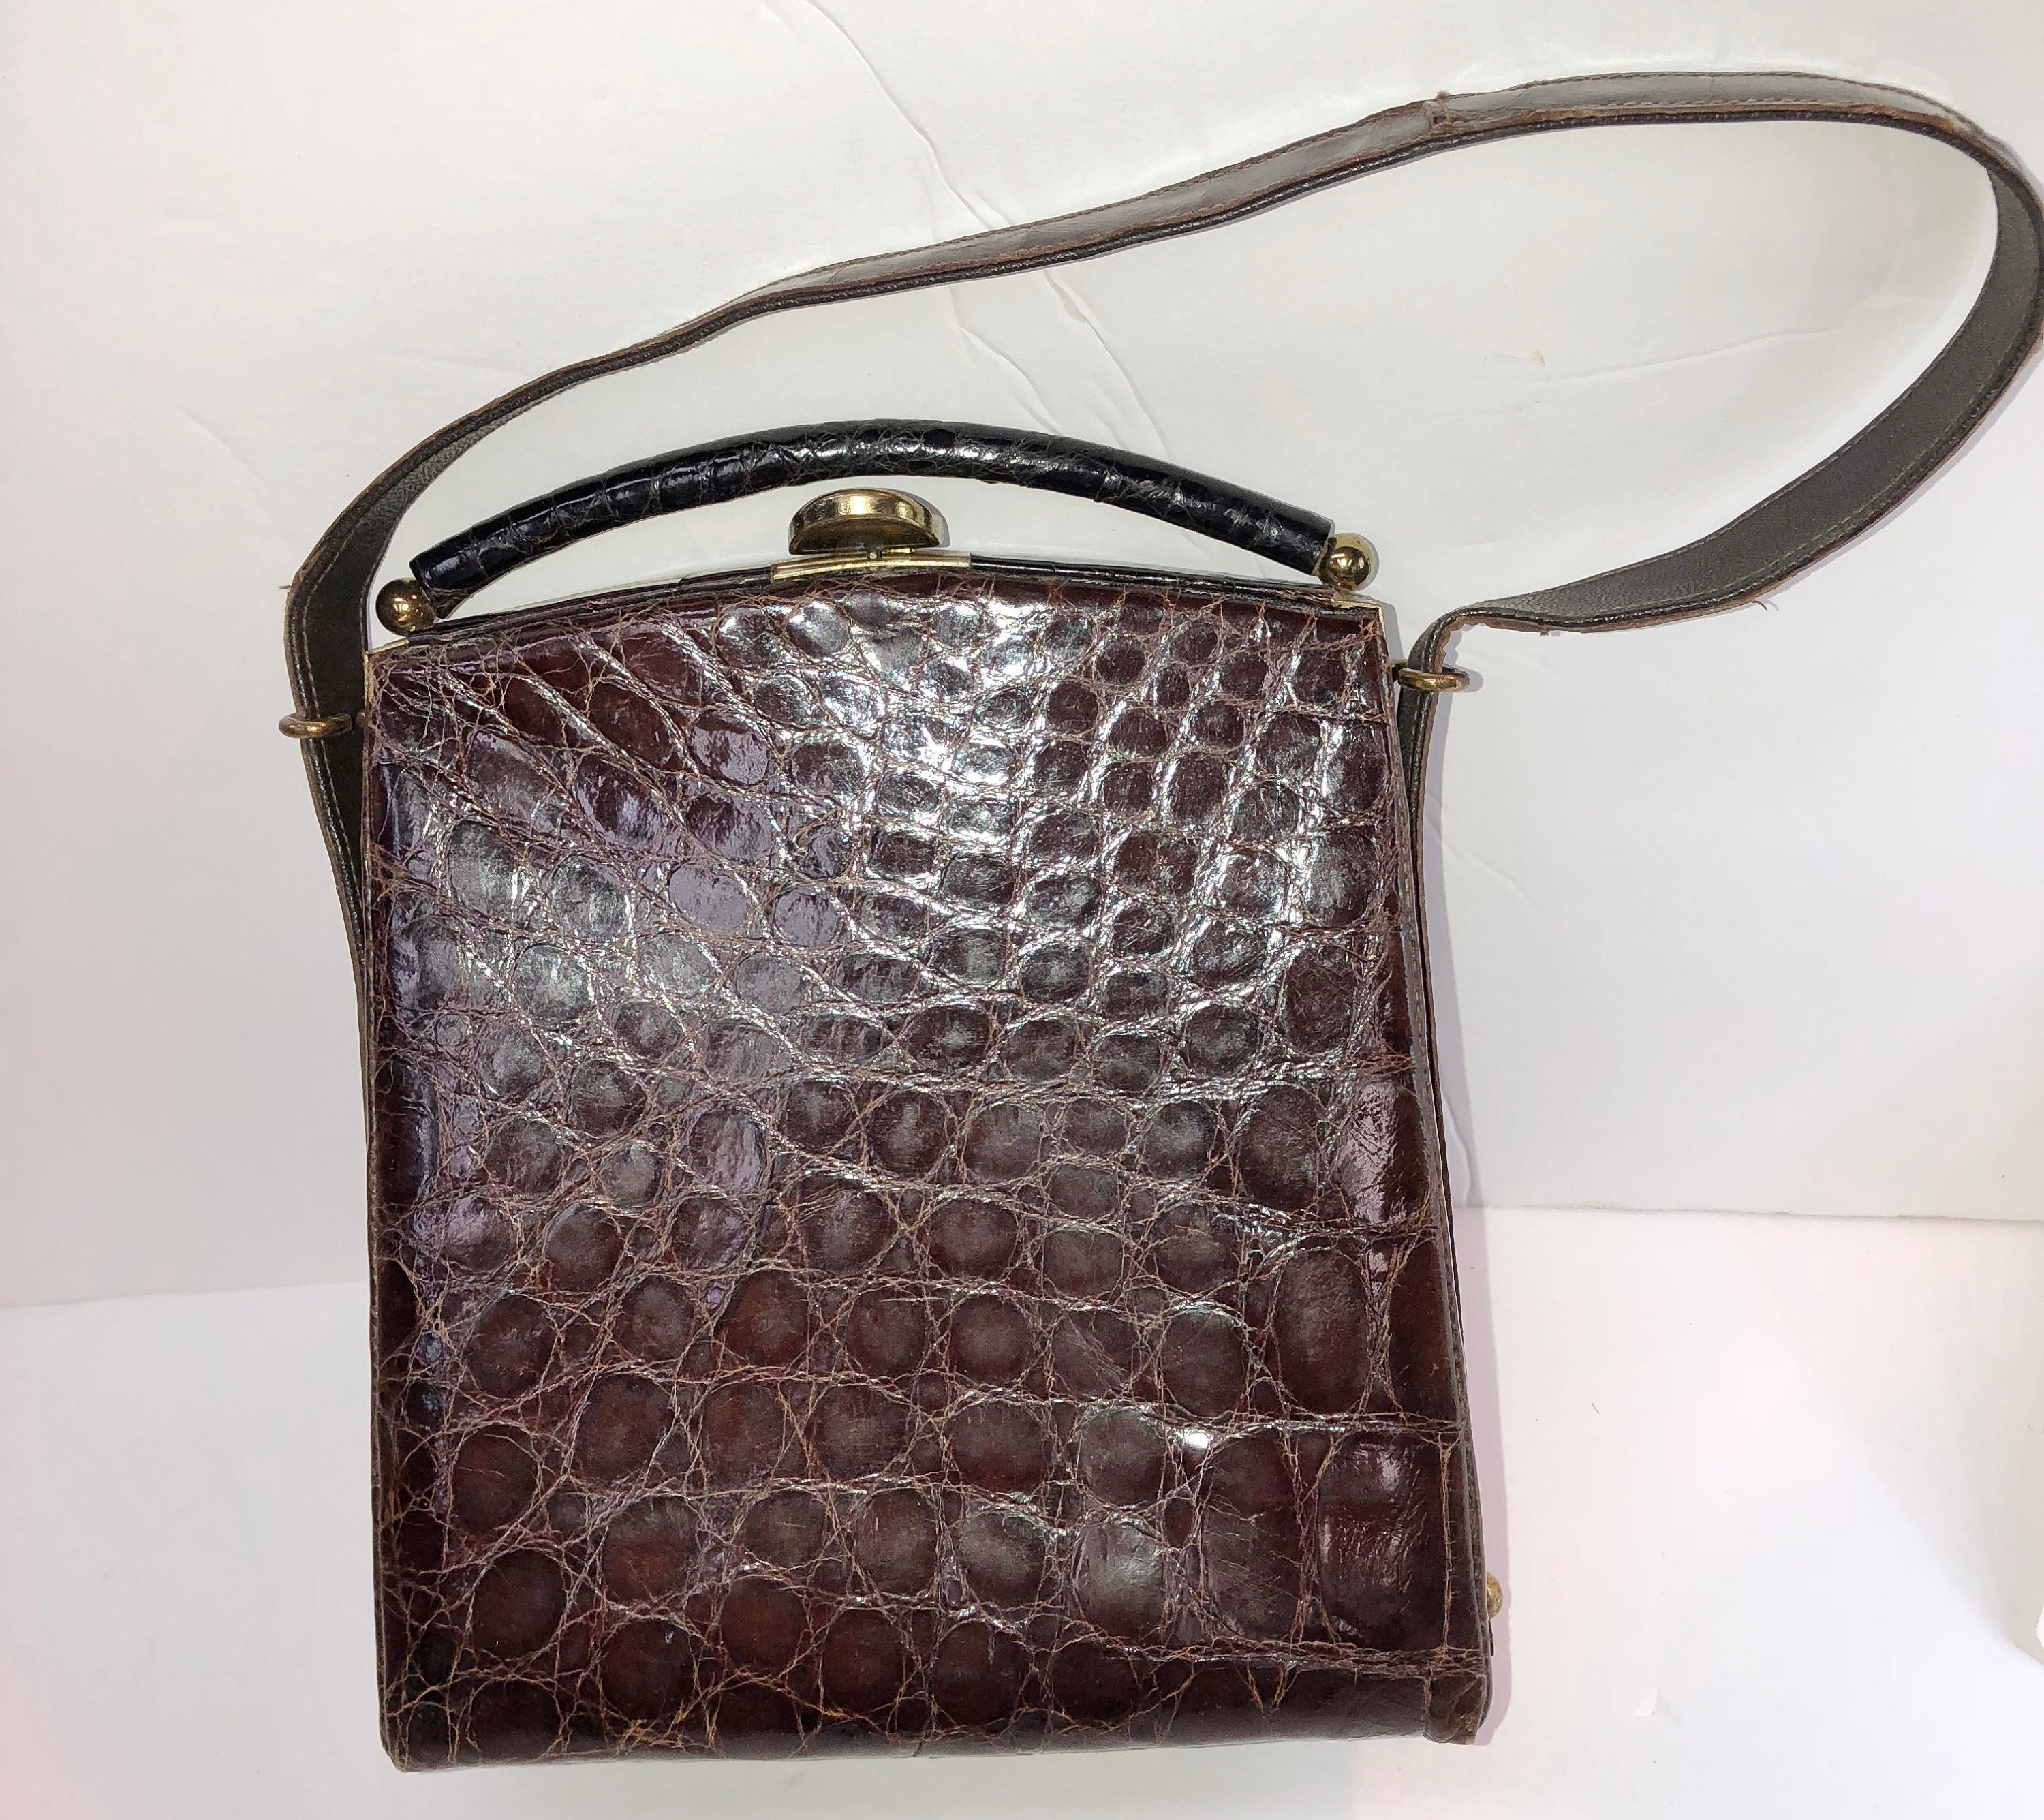 Alligator Print Retro Purse - Vintage handbag - Embossed Gator Print Bag